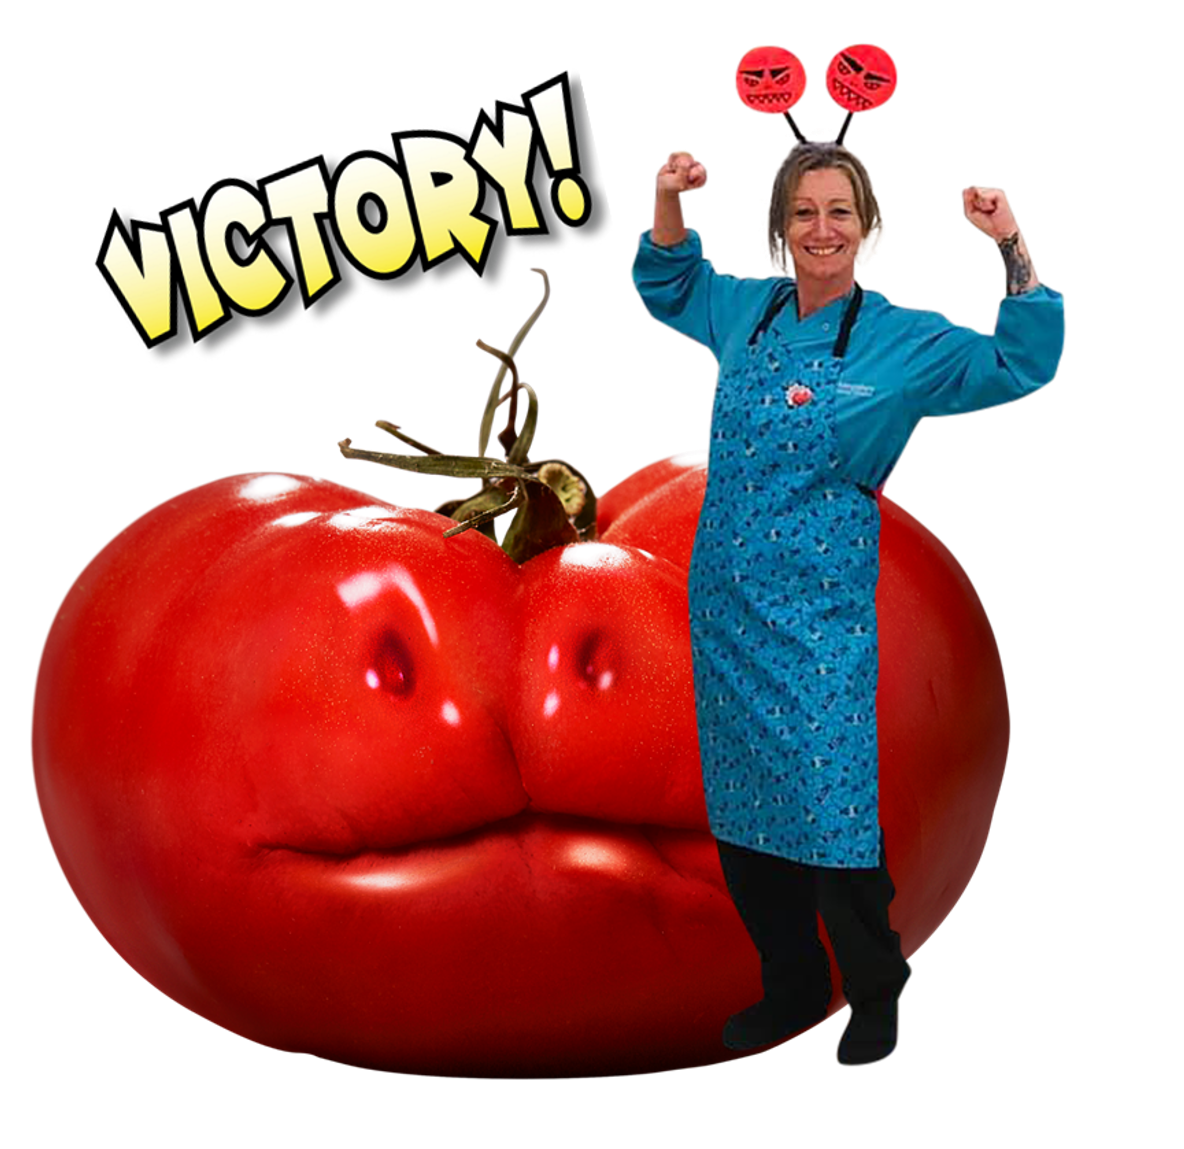 Karen-tomato